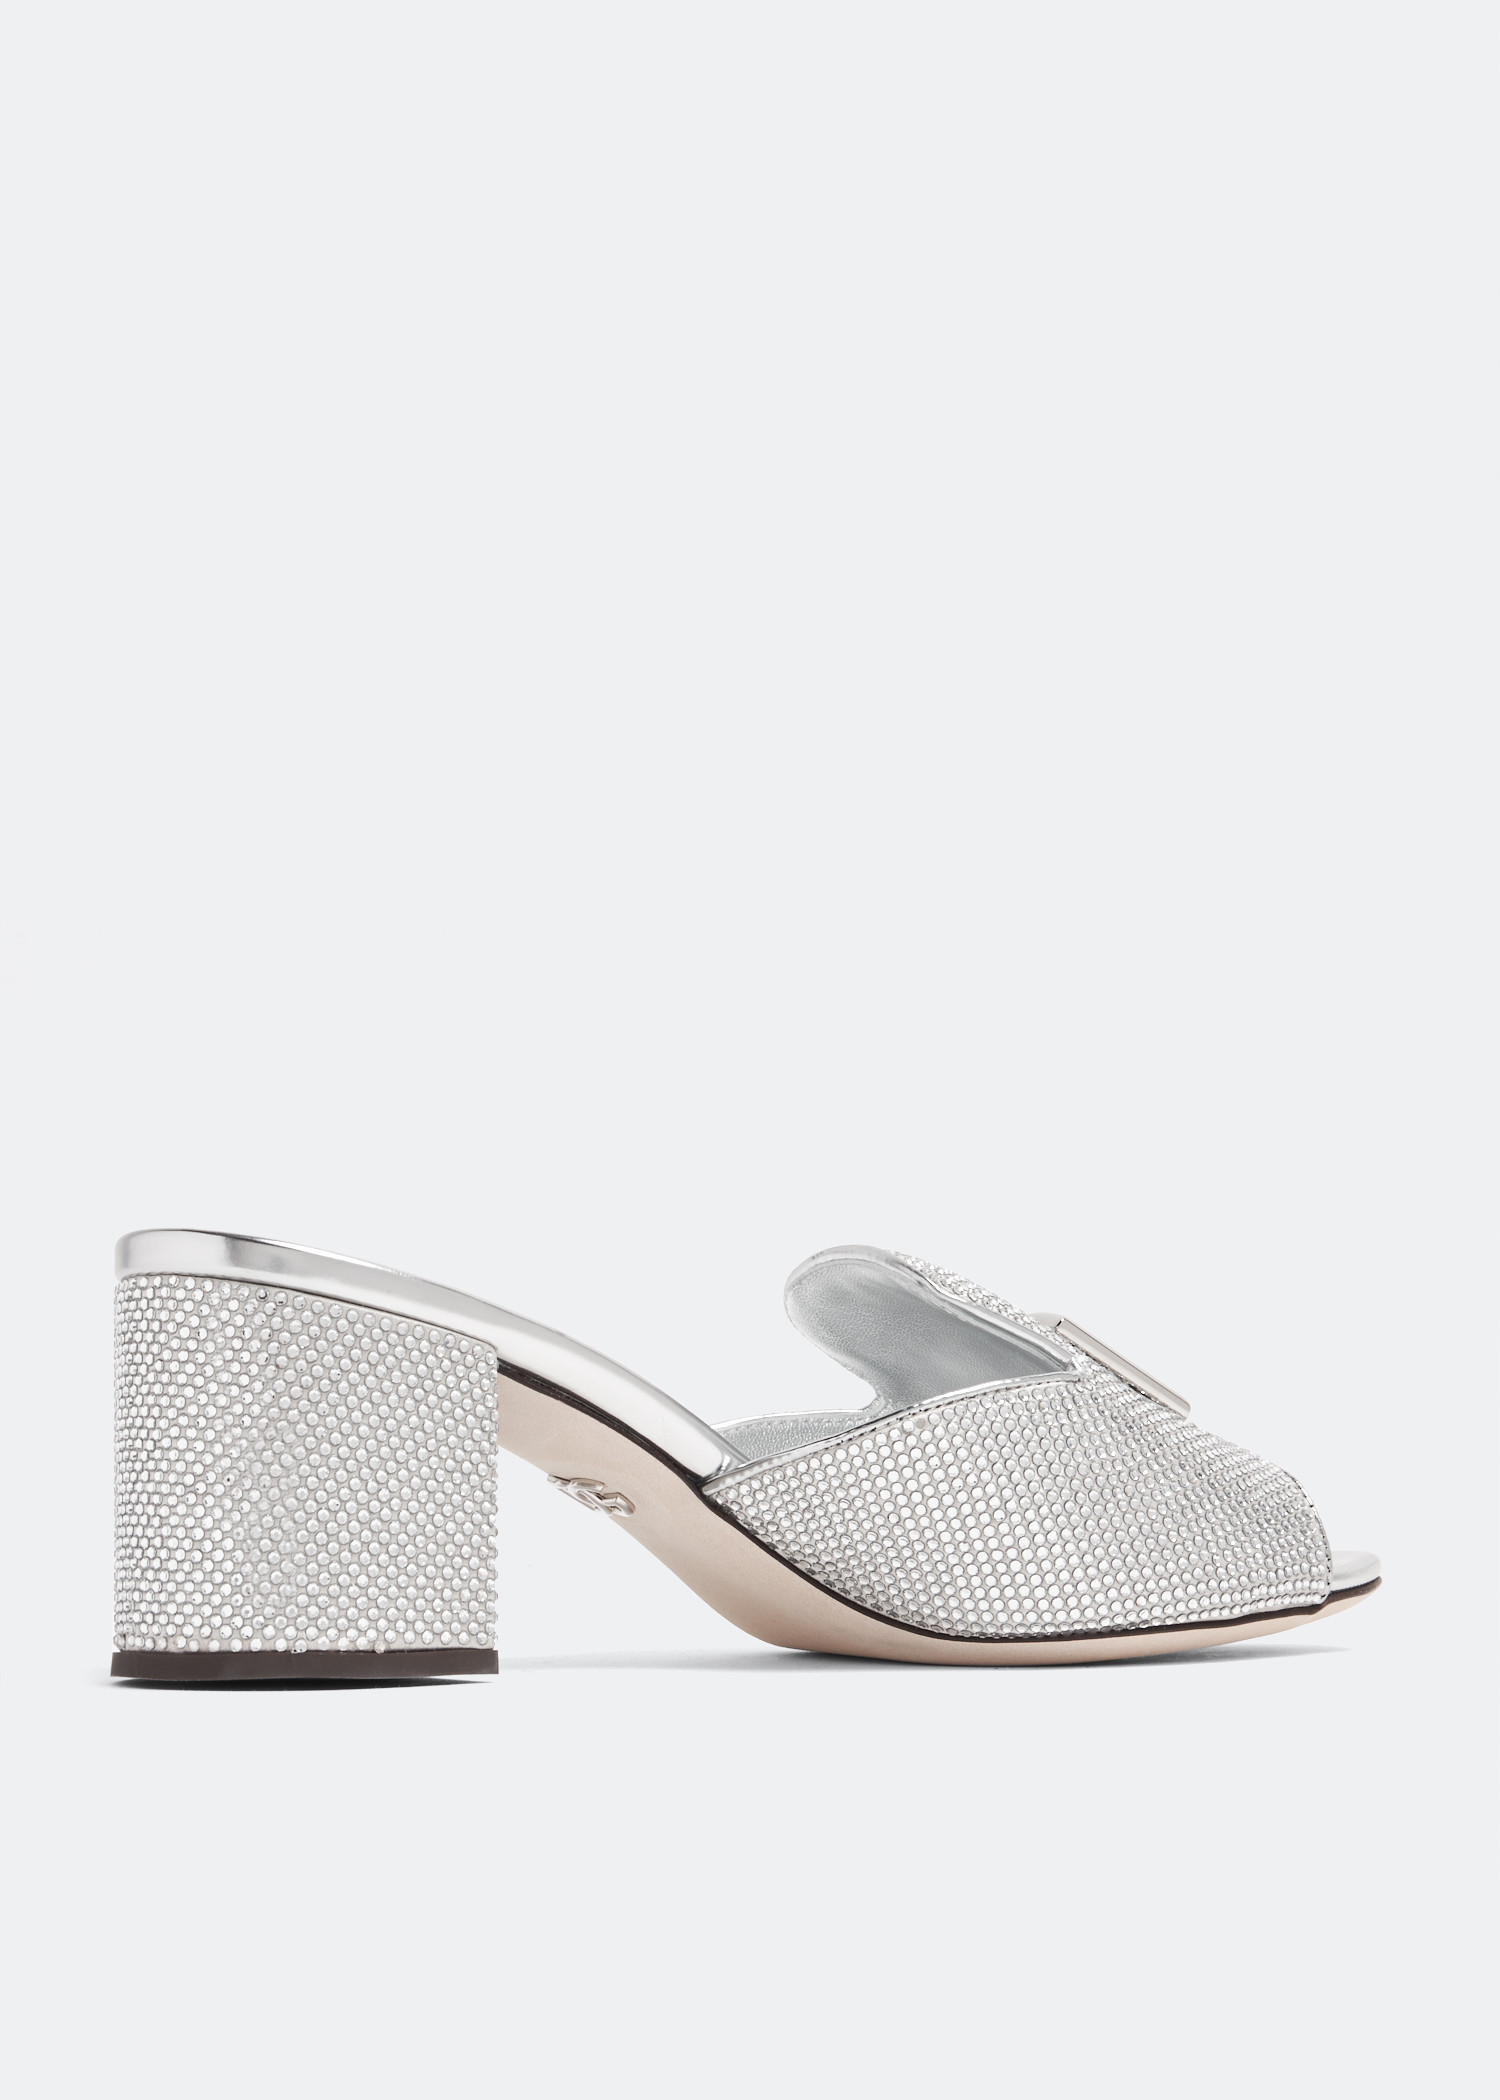 Dolce&Gabbana Crystal-embellished sandals for Women - Silver in 